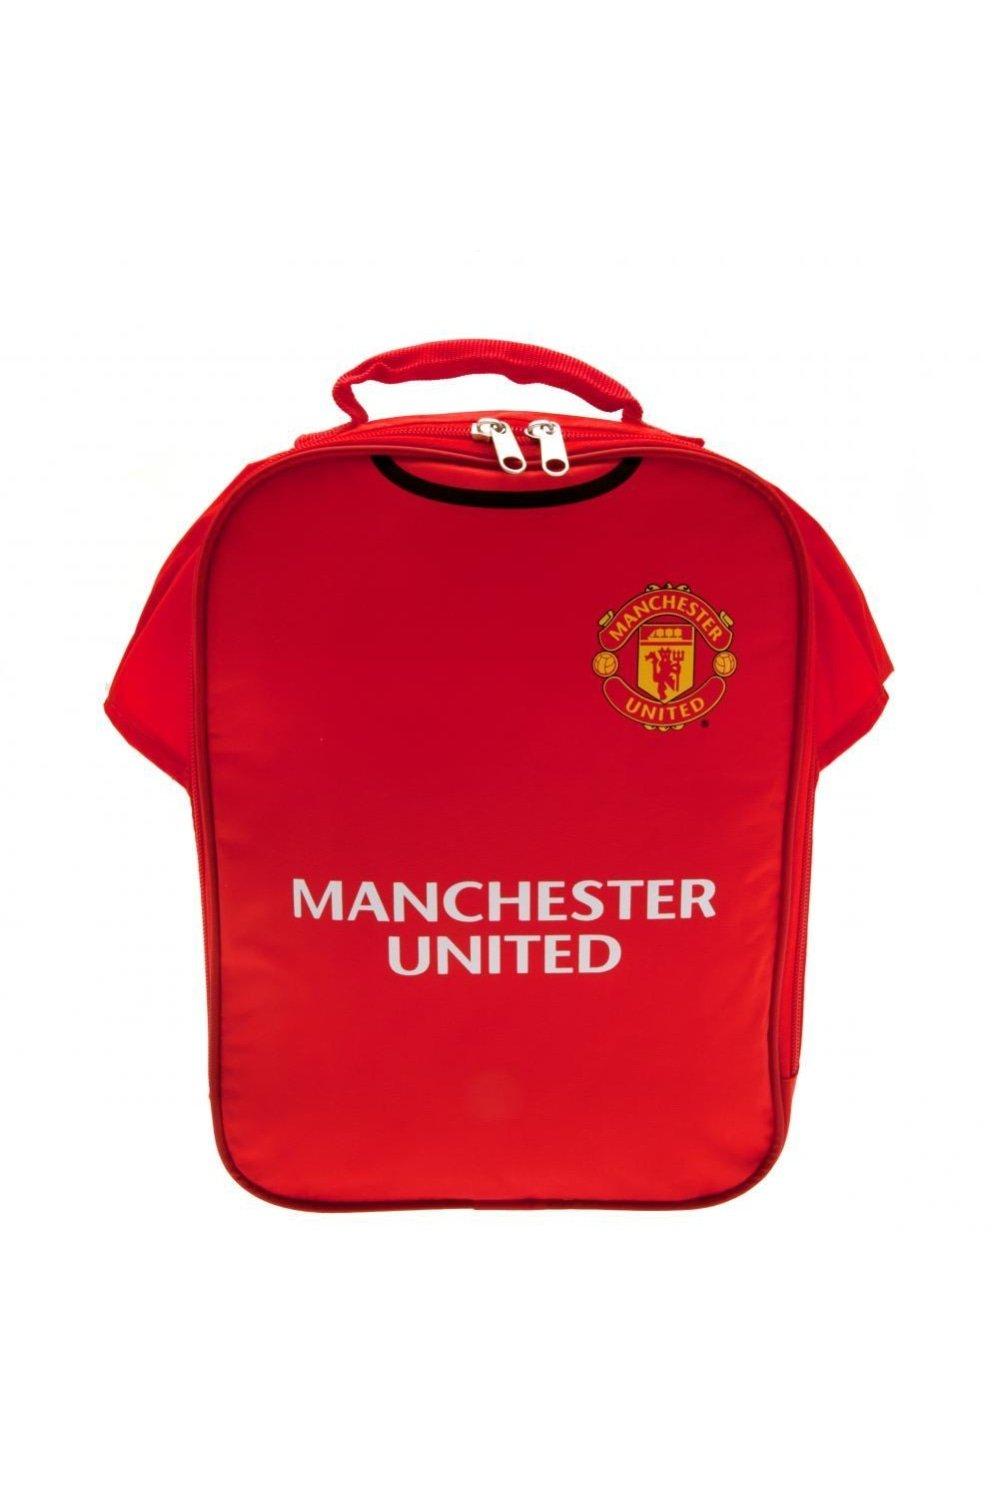 Сумка для обеда Manchester United FC, красный спортивная сумка манчестер юнайтед manchester united fc красный